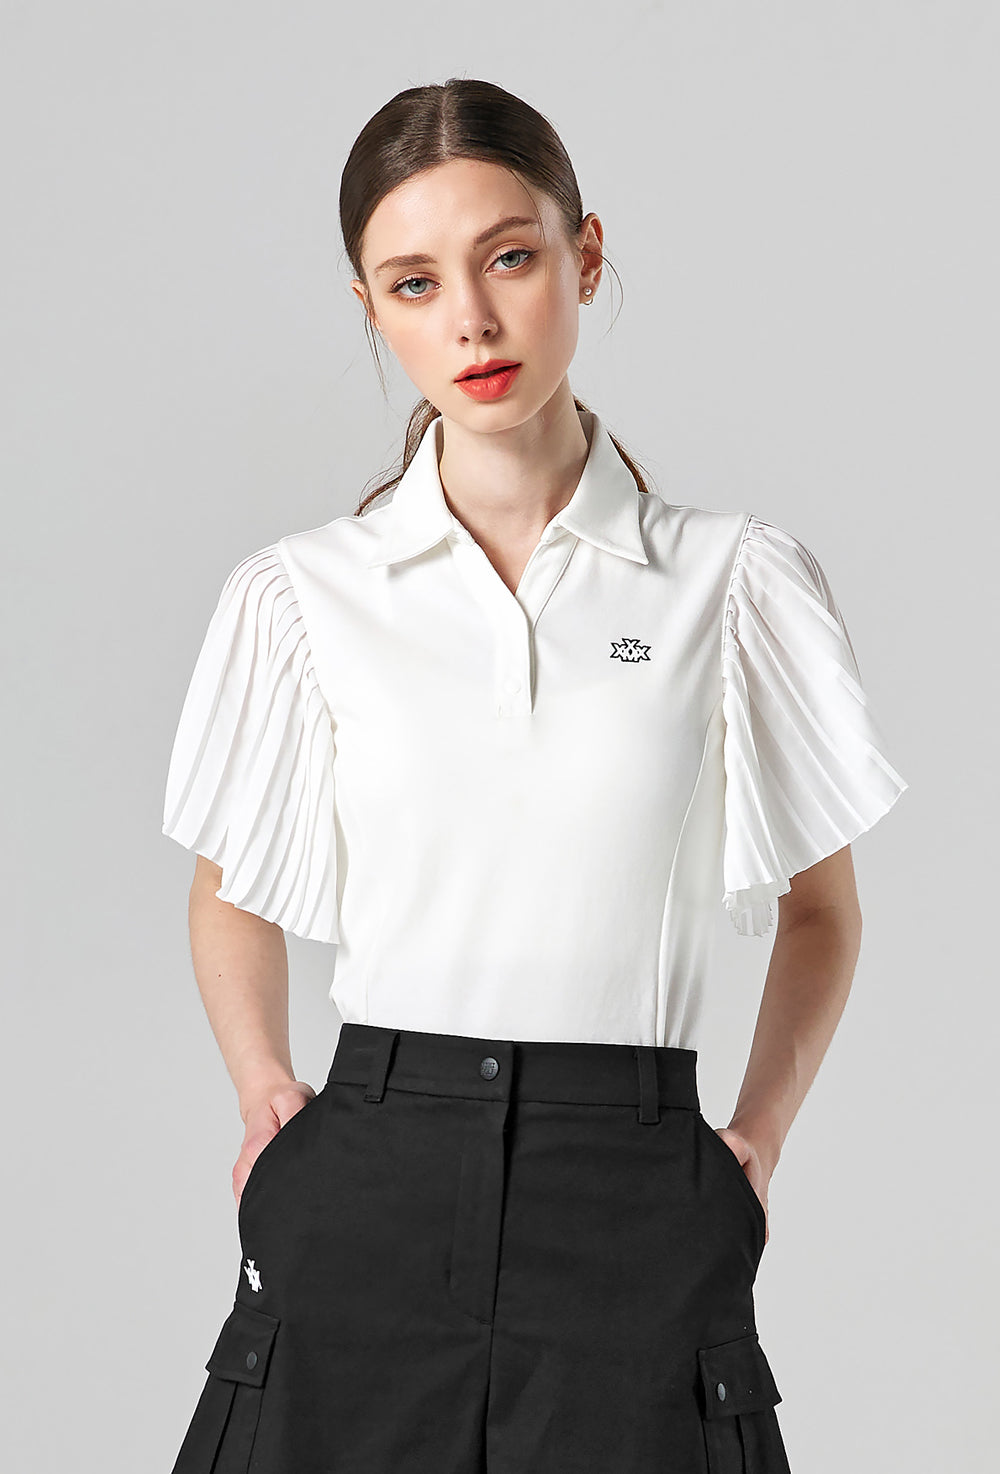 Pleated Polo Short Sleeve - White